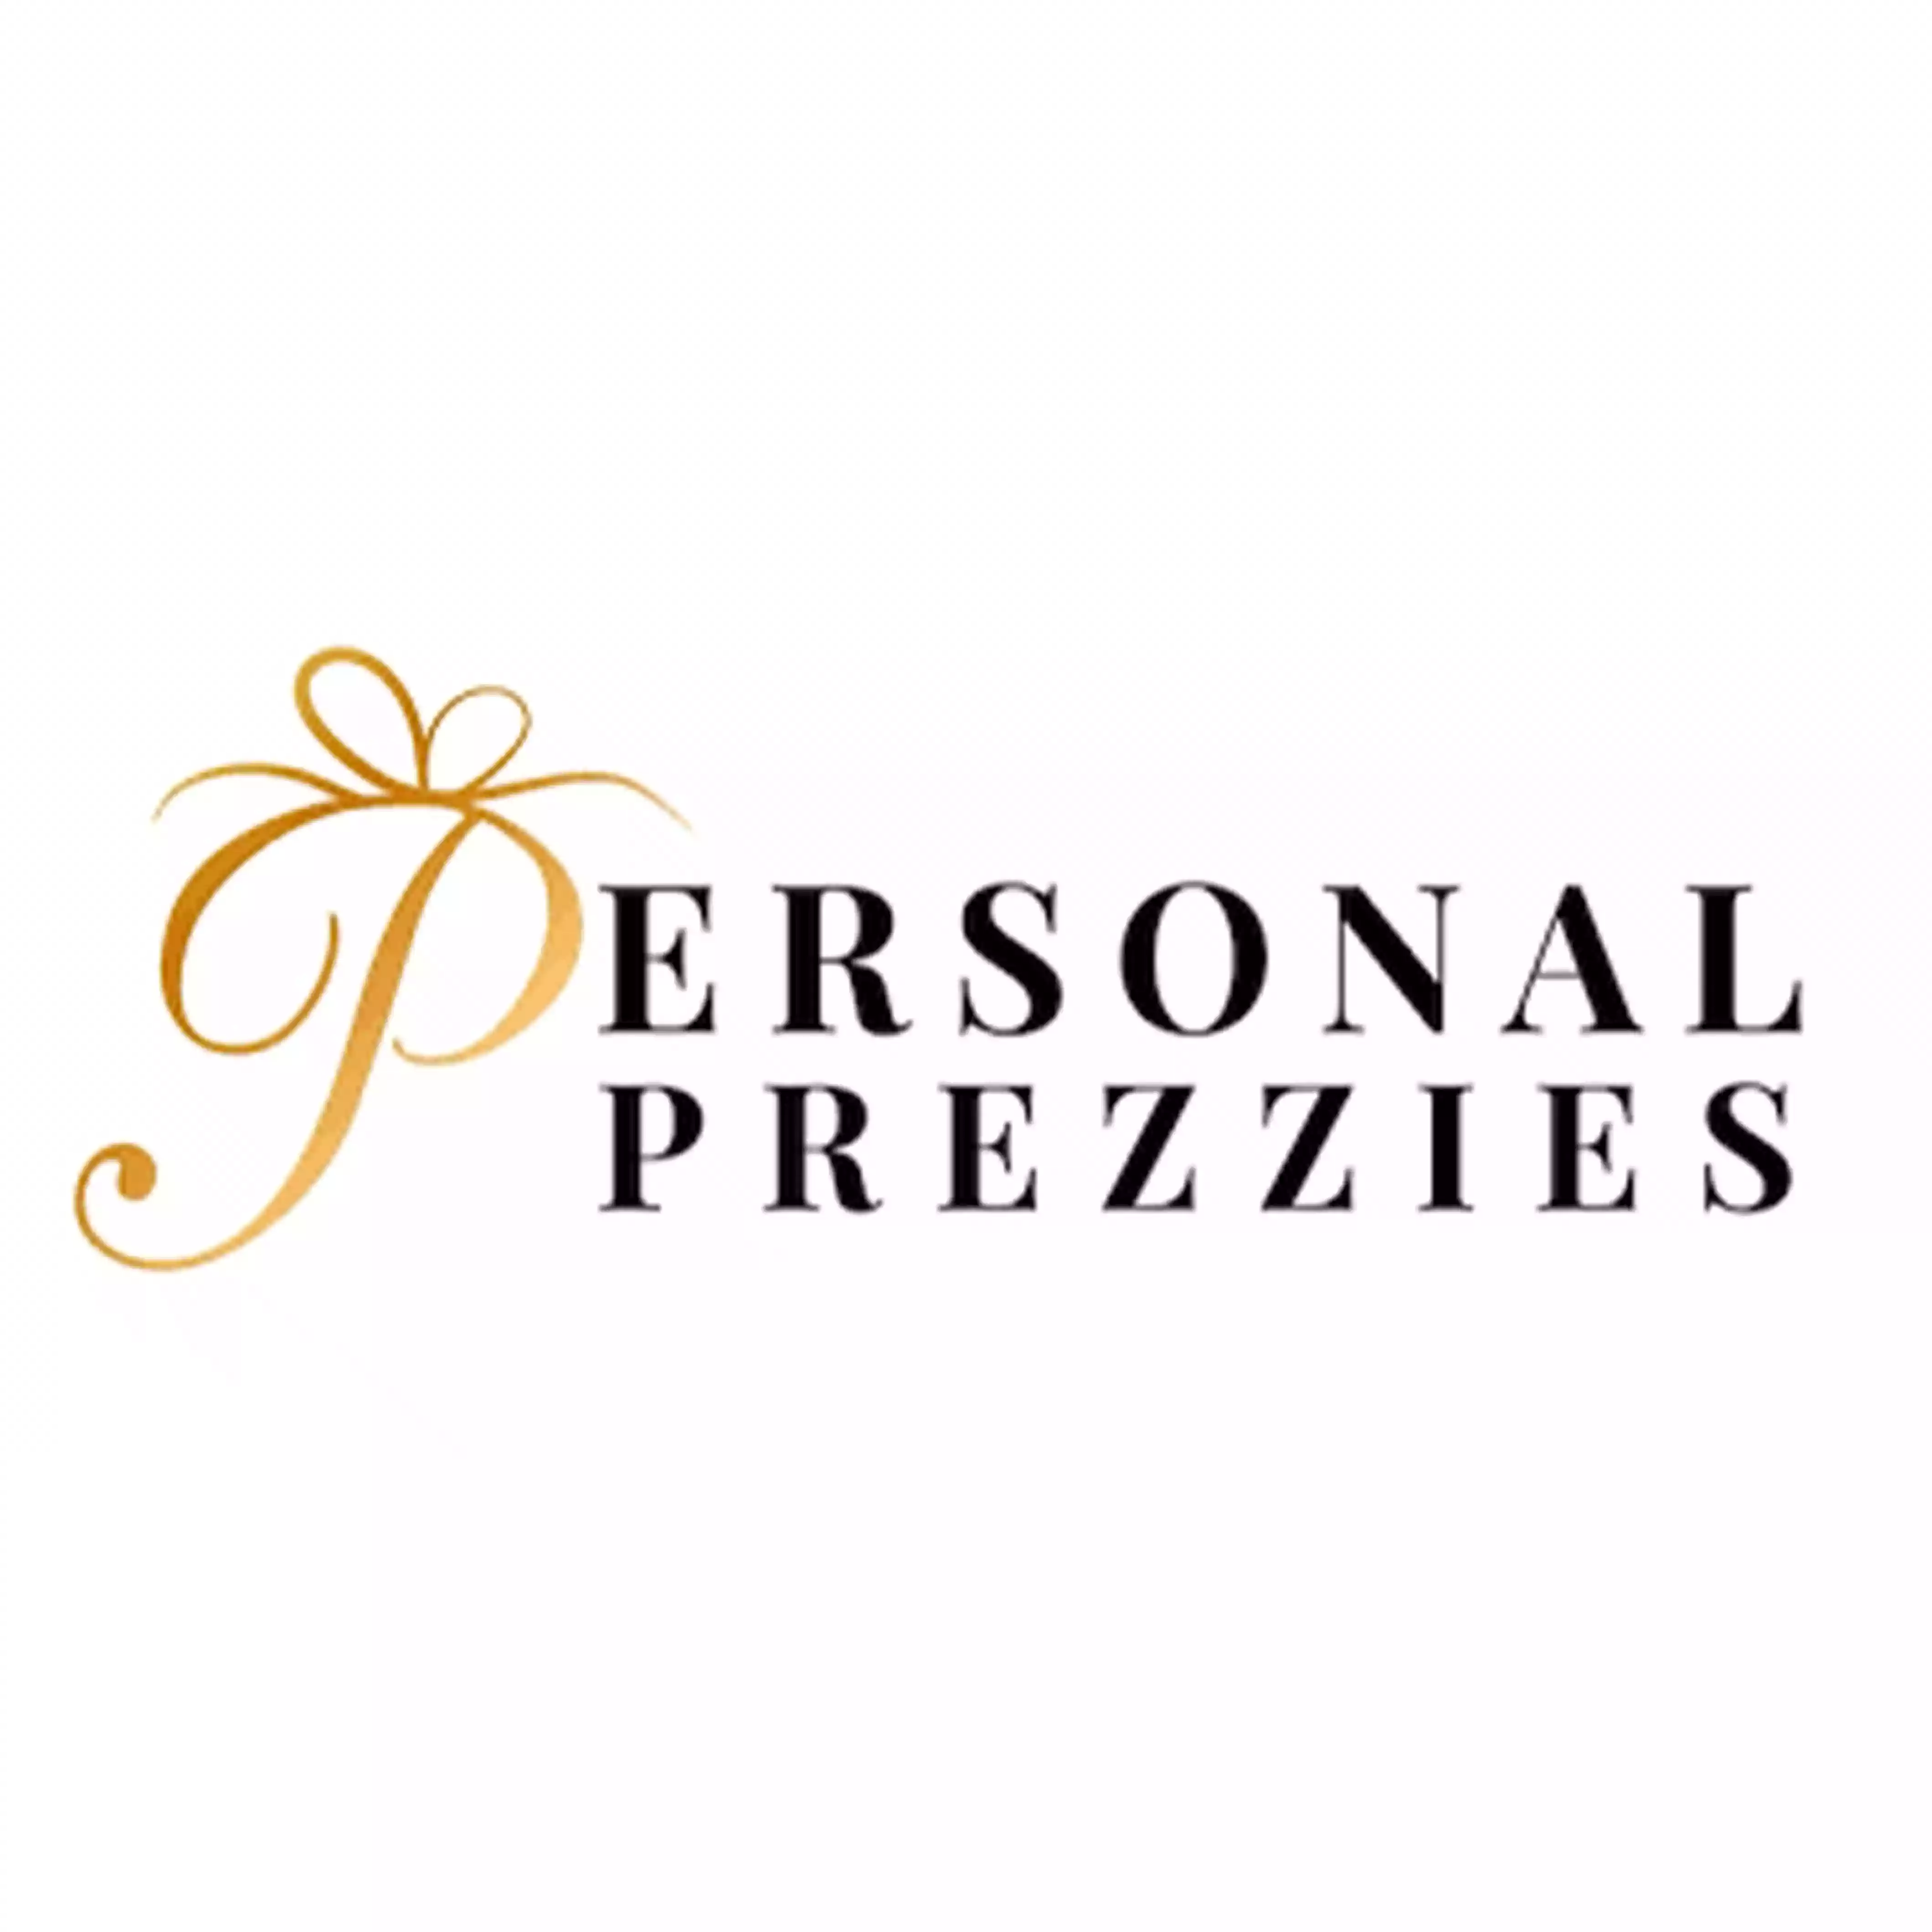 Personal Prezzies